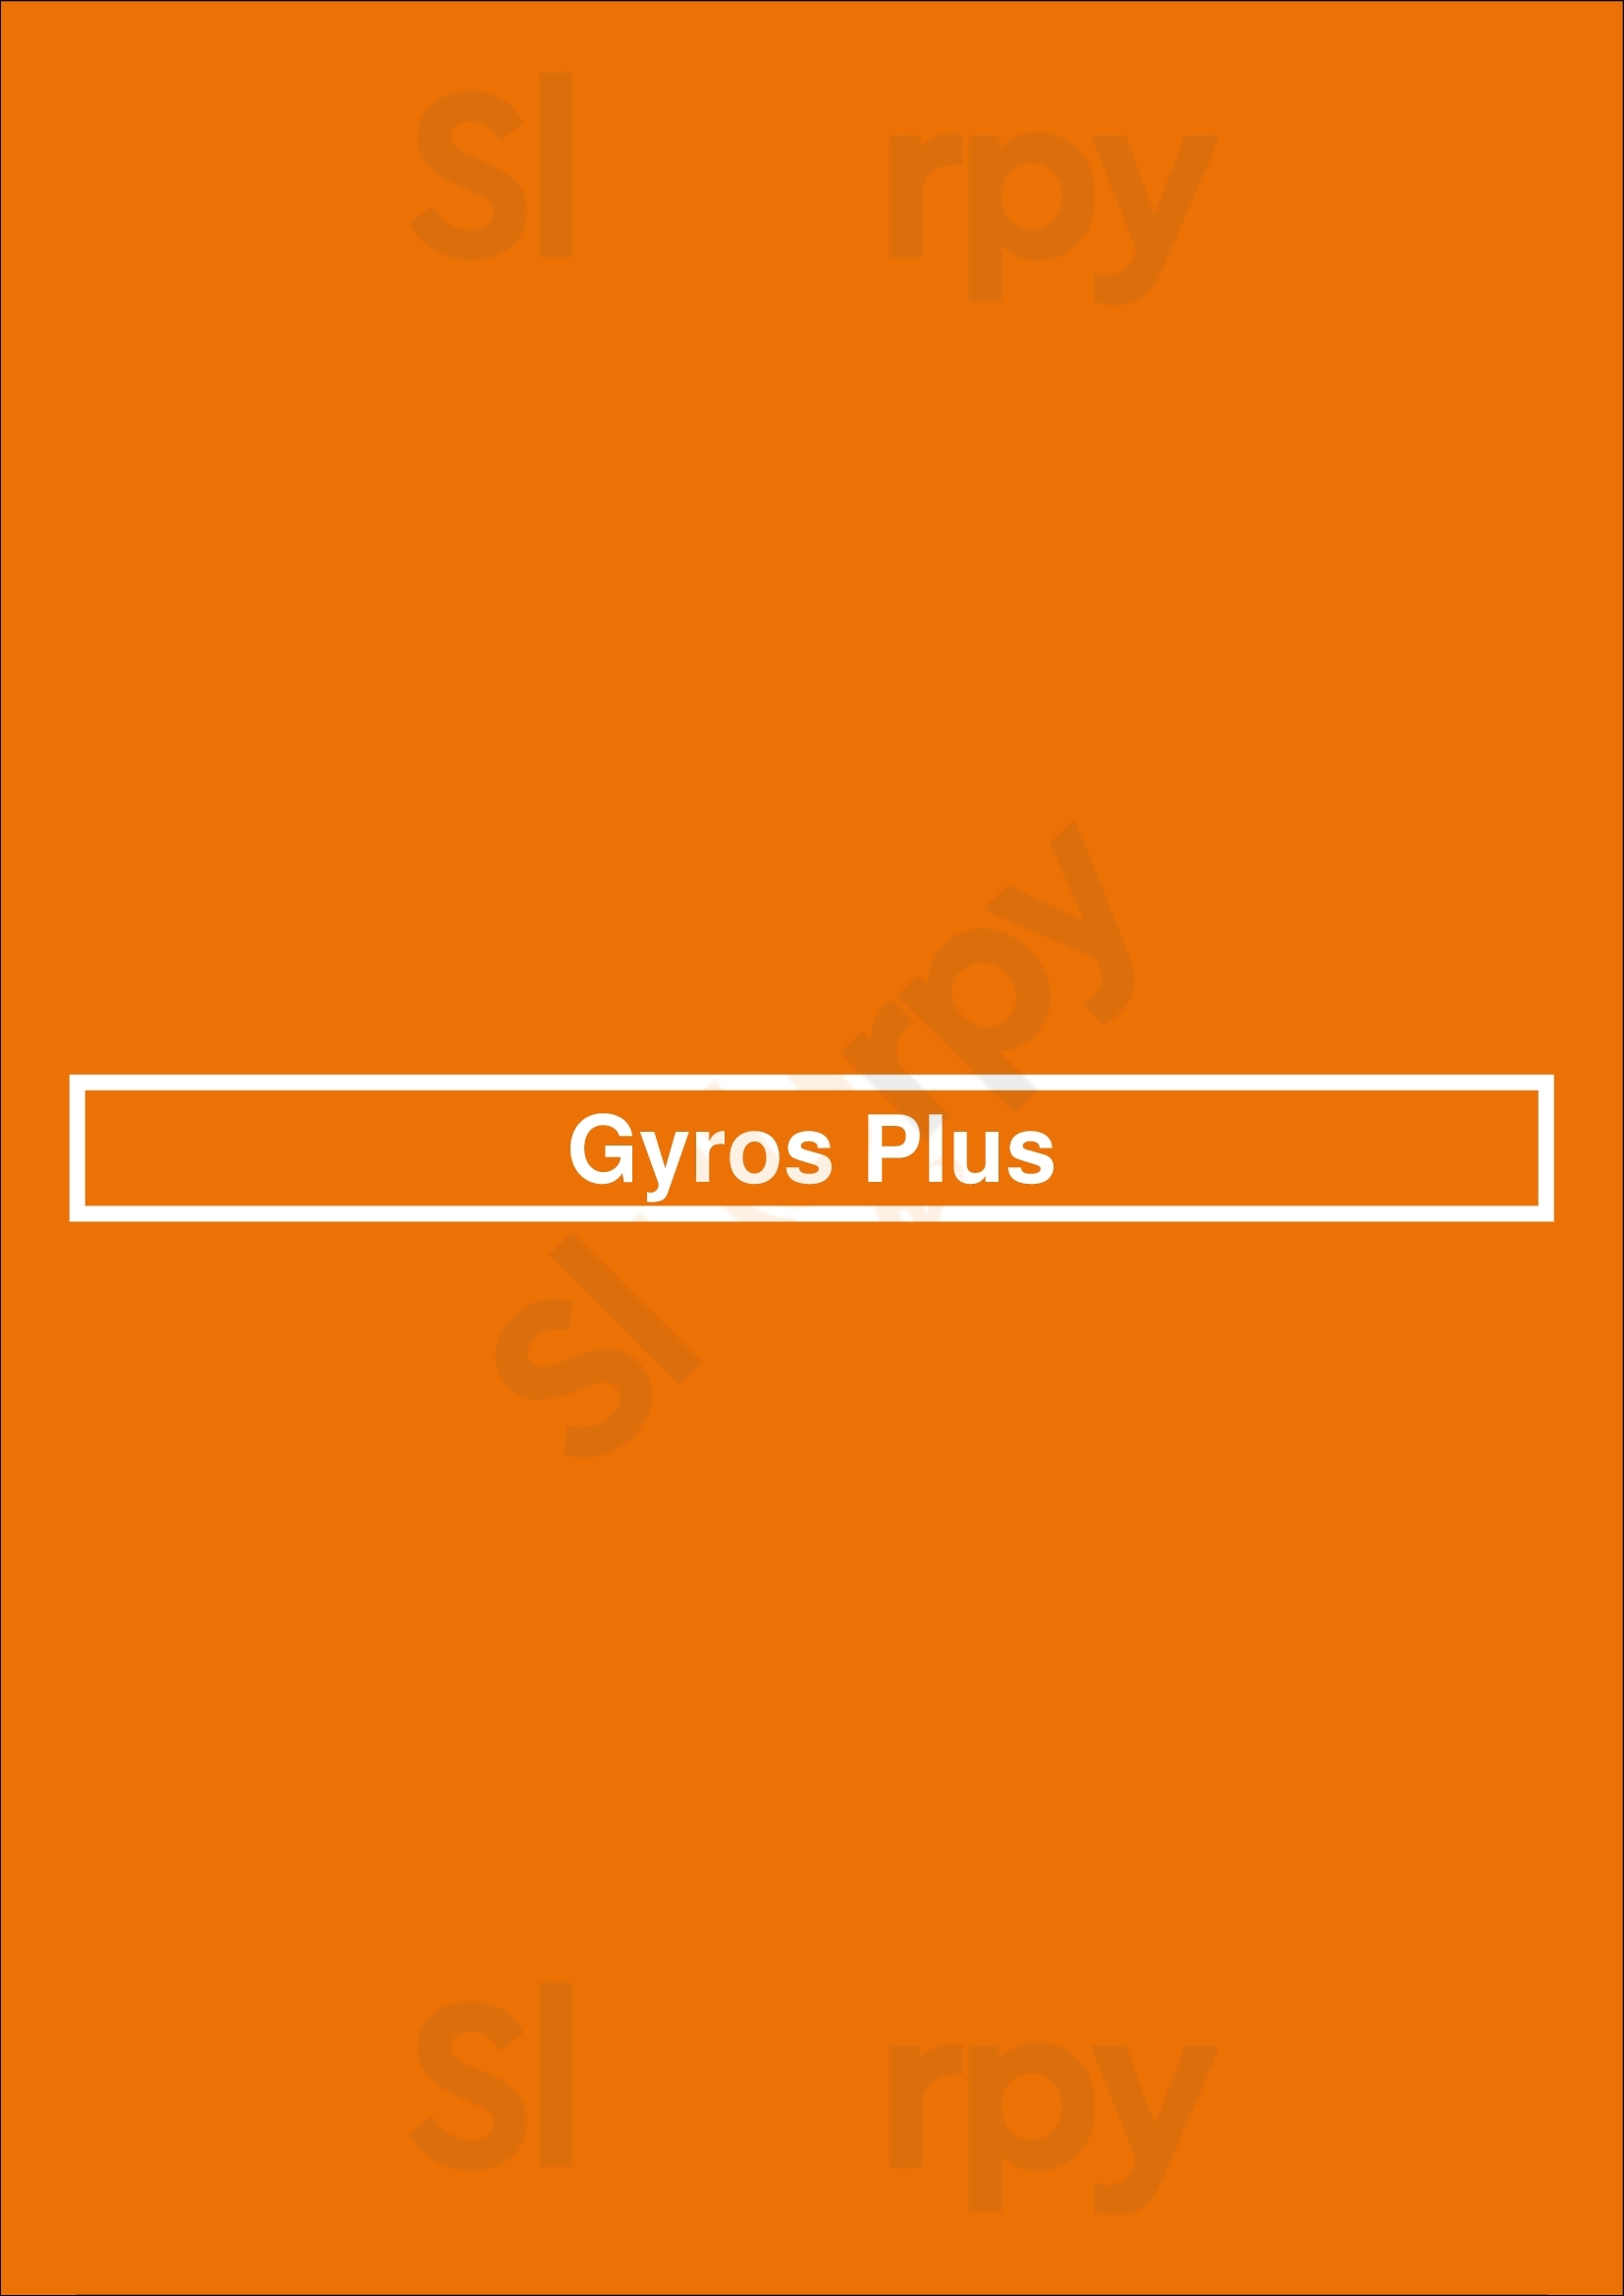 Gyros Plus Scottsdale Menu - 1